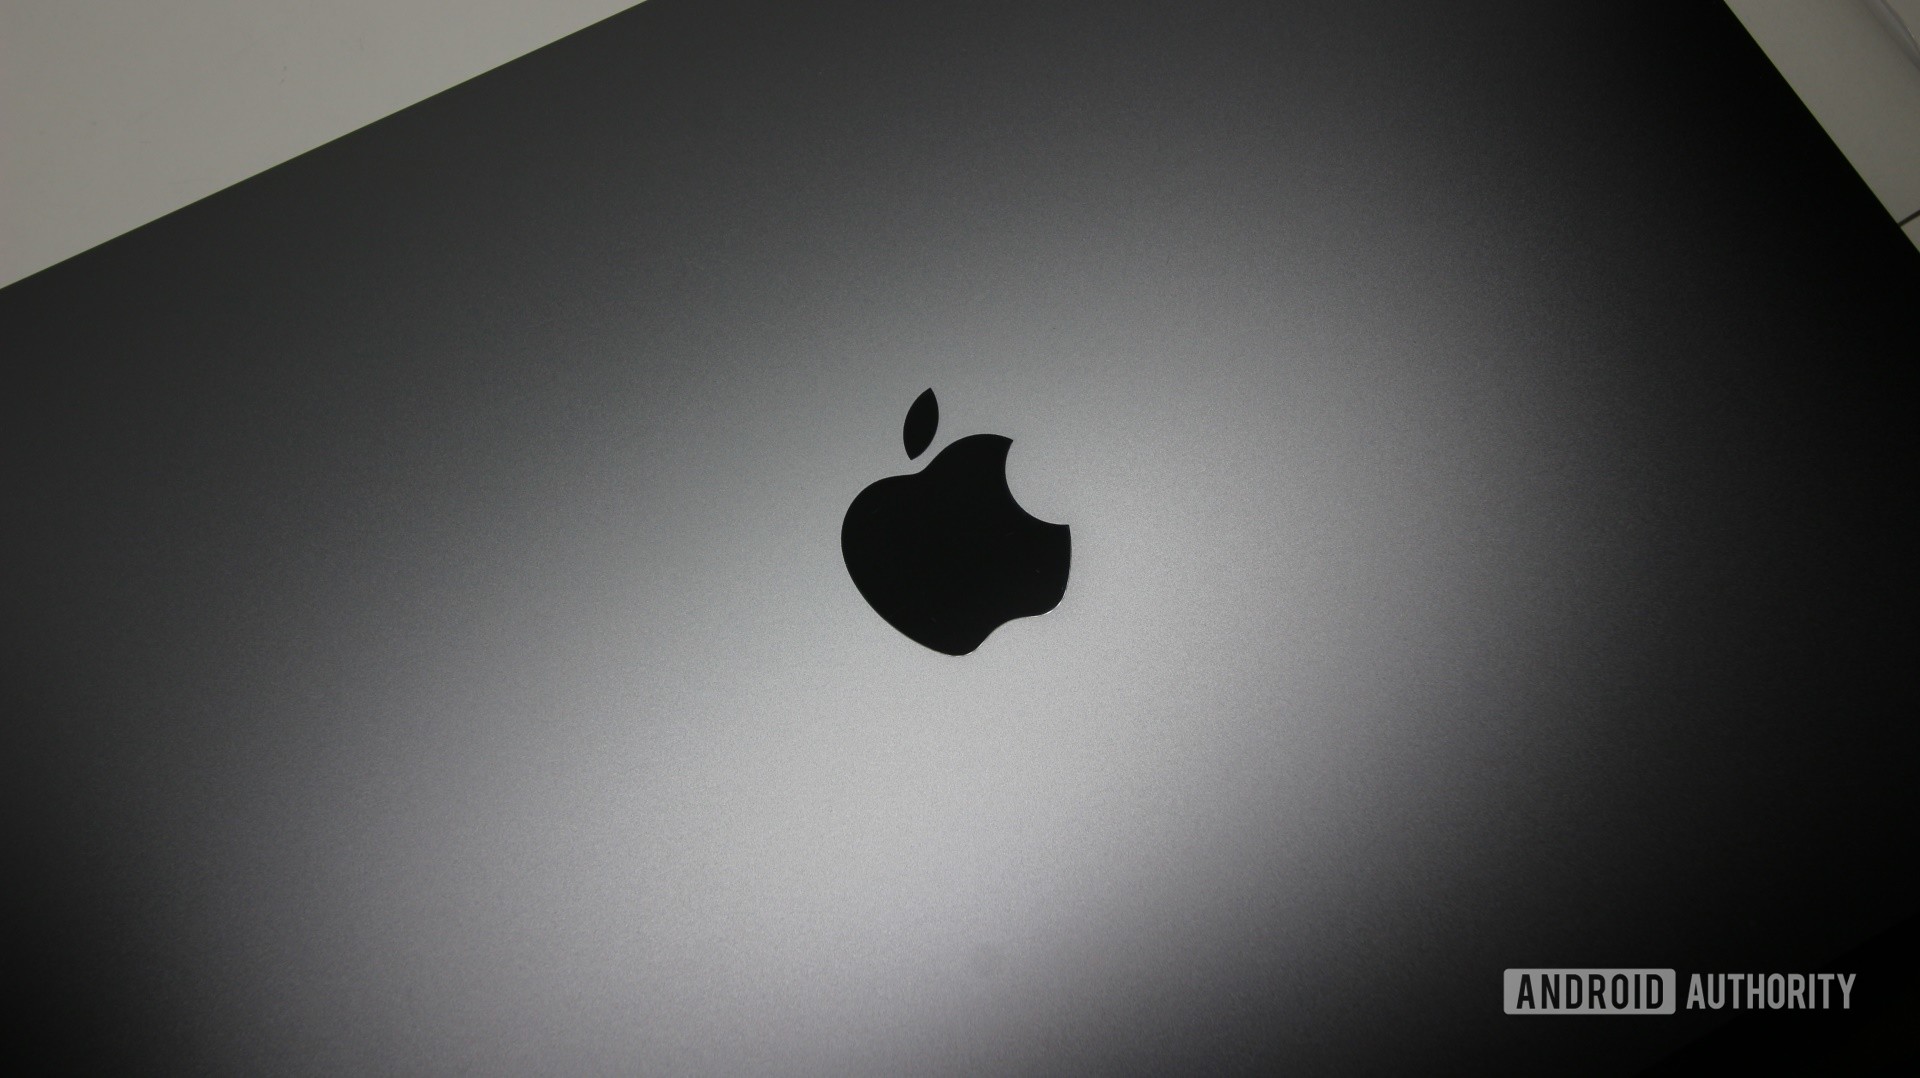 Apple MacBook Air M1 close-up of the logo